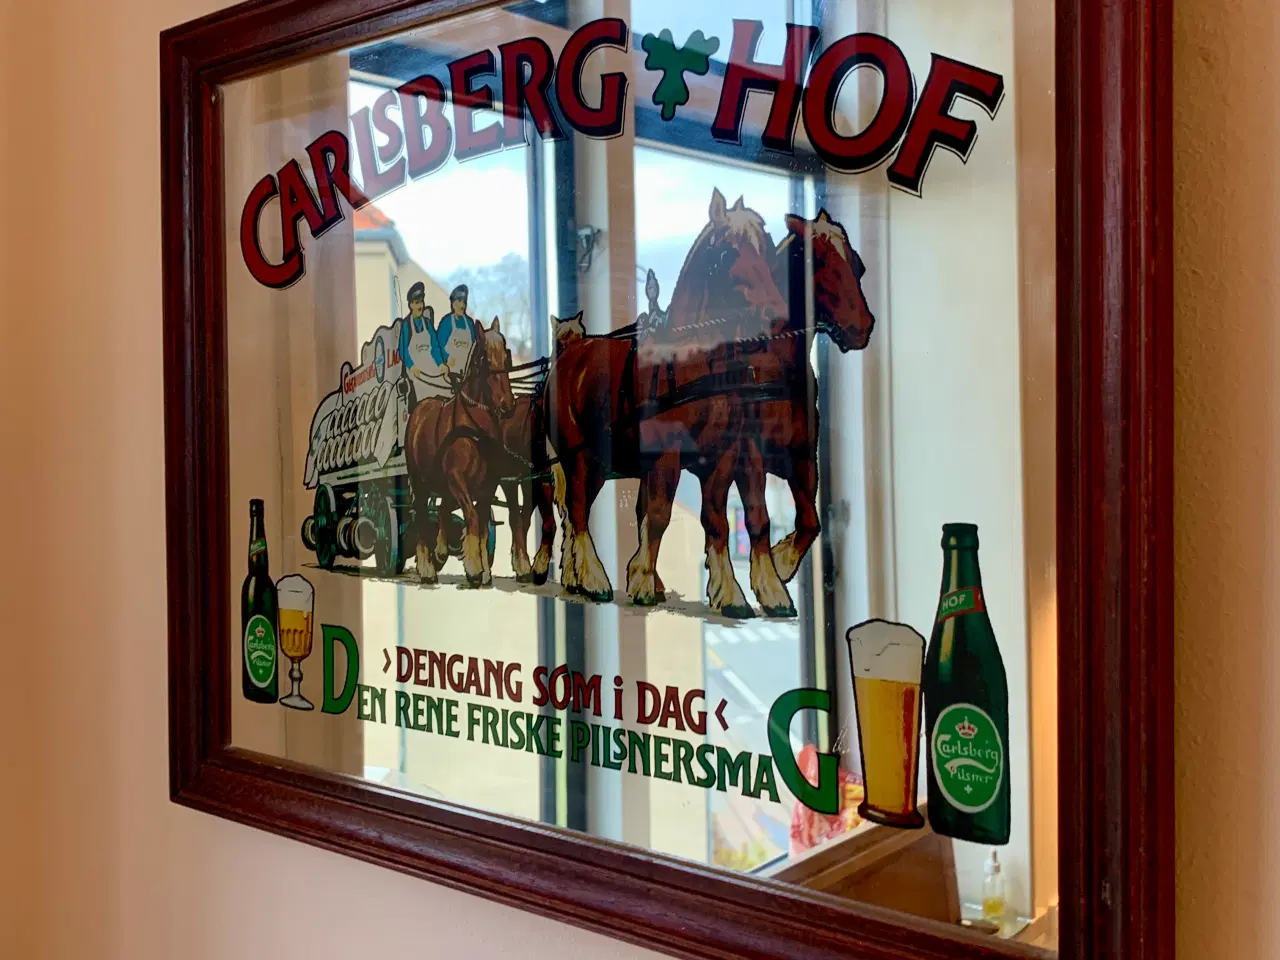 Billede 5 - Carlsberg hof - reklame øl spejl